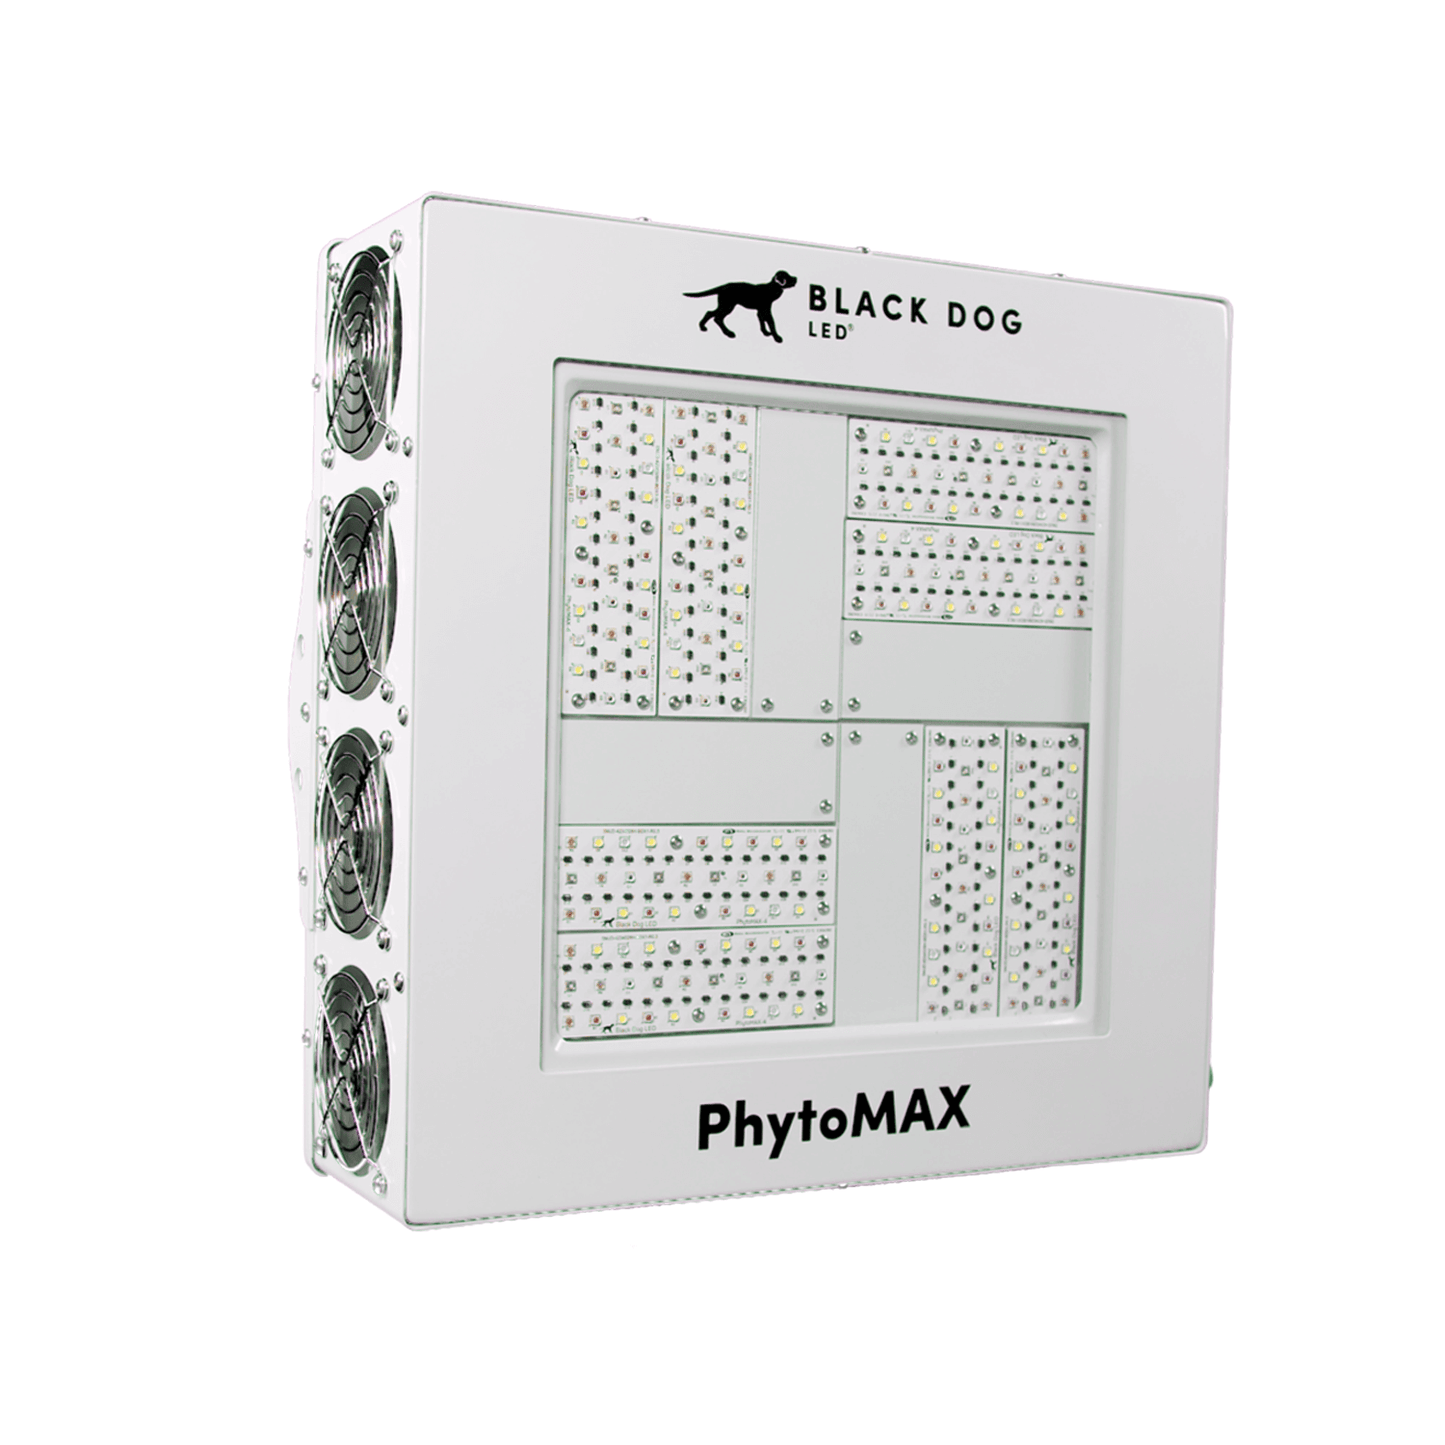 Black Dog LED PhytoMAX-4 8SP 500W LED Grow Light BD001-0103 Grow Lights 701919639977